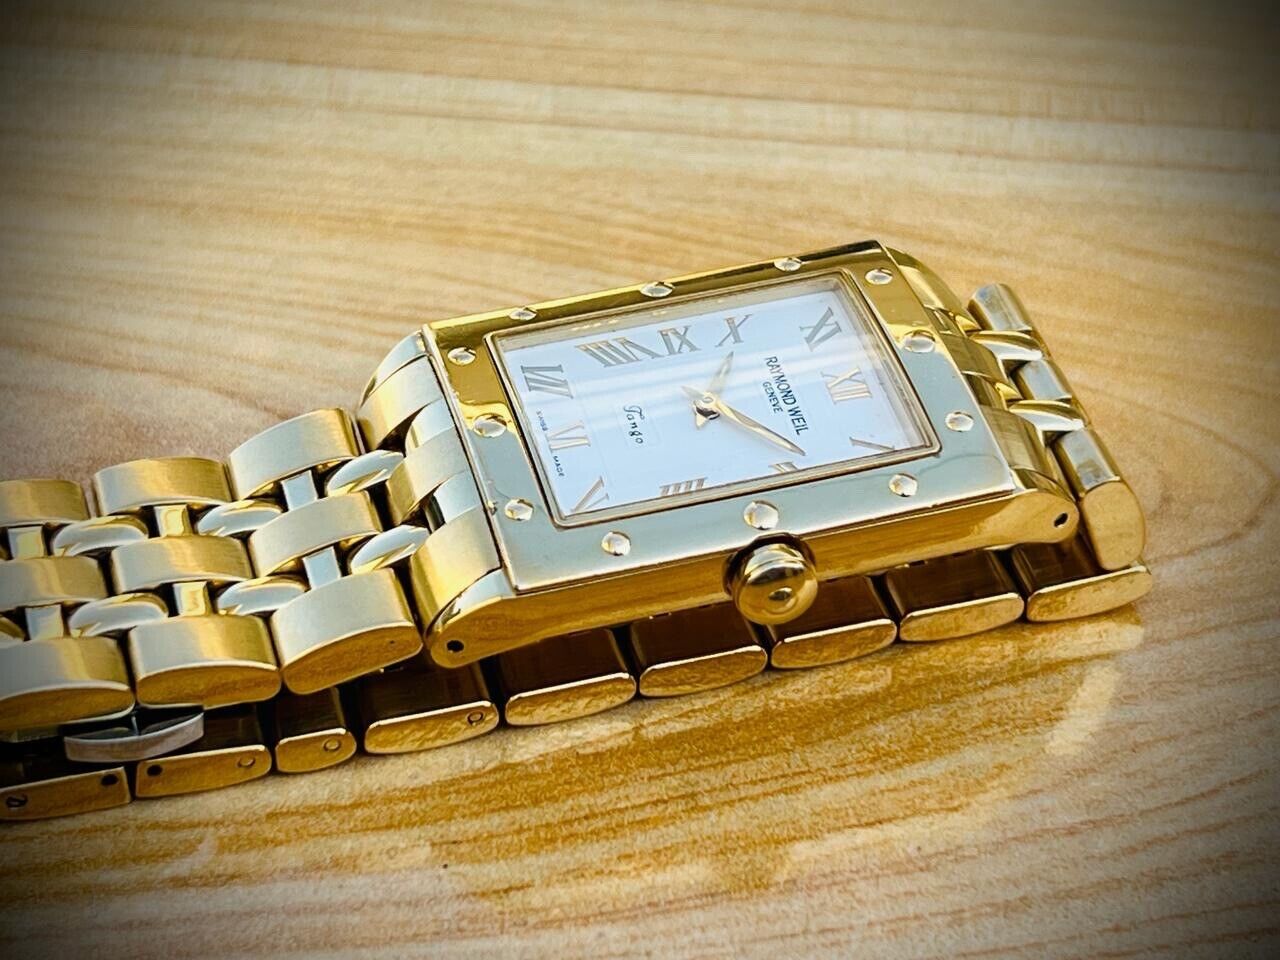 Raymond Weil Geneve Tango Gold 5381 28mm Swiss Made Watch, Perfect - Grab A Watch Co